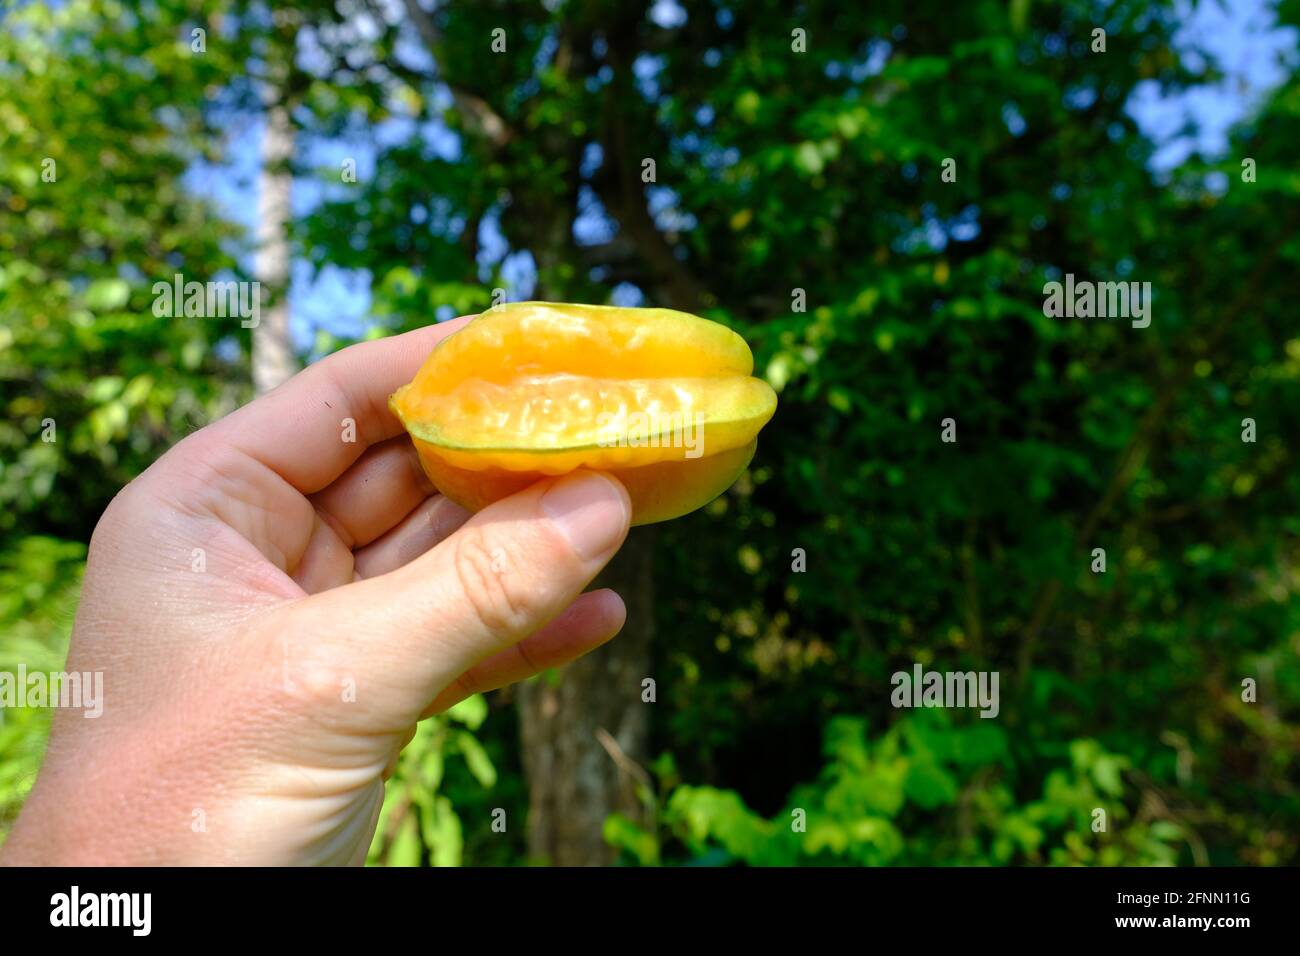 Indonesia Anambas Islands - Carambola yellow star fruit in hand Stock Photo